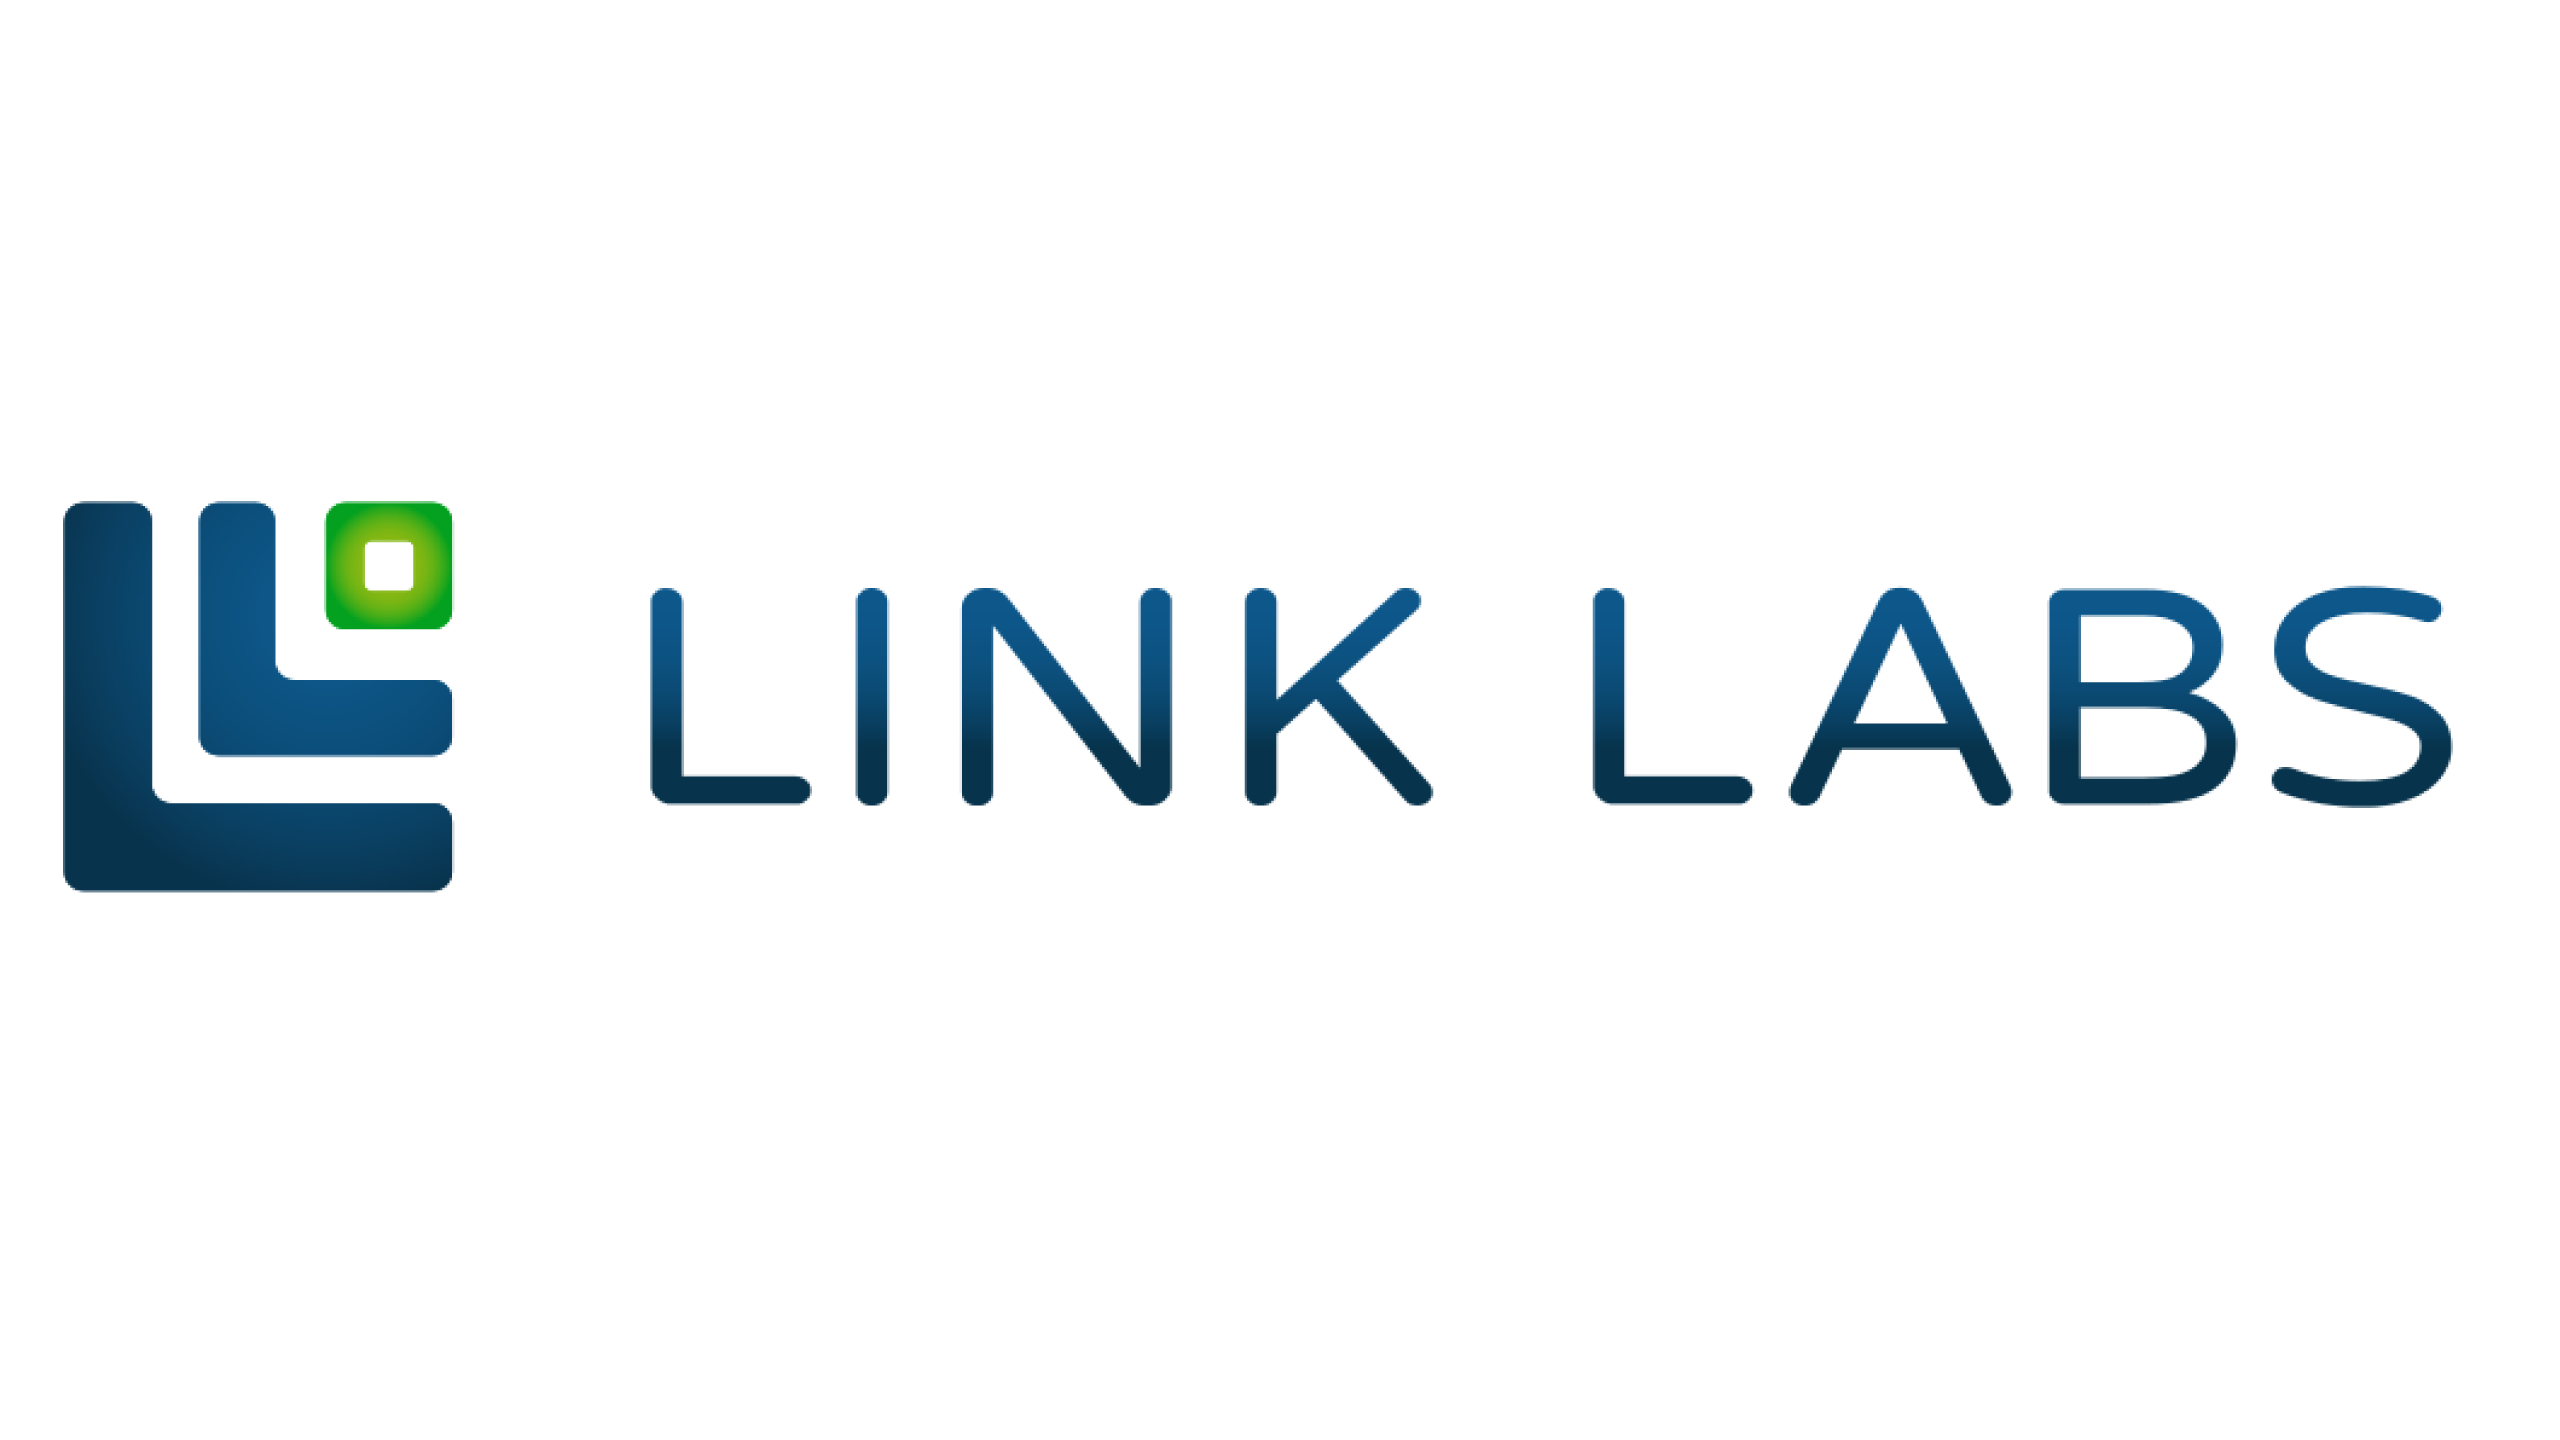 (c) Link-labs.com